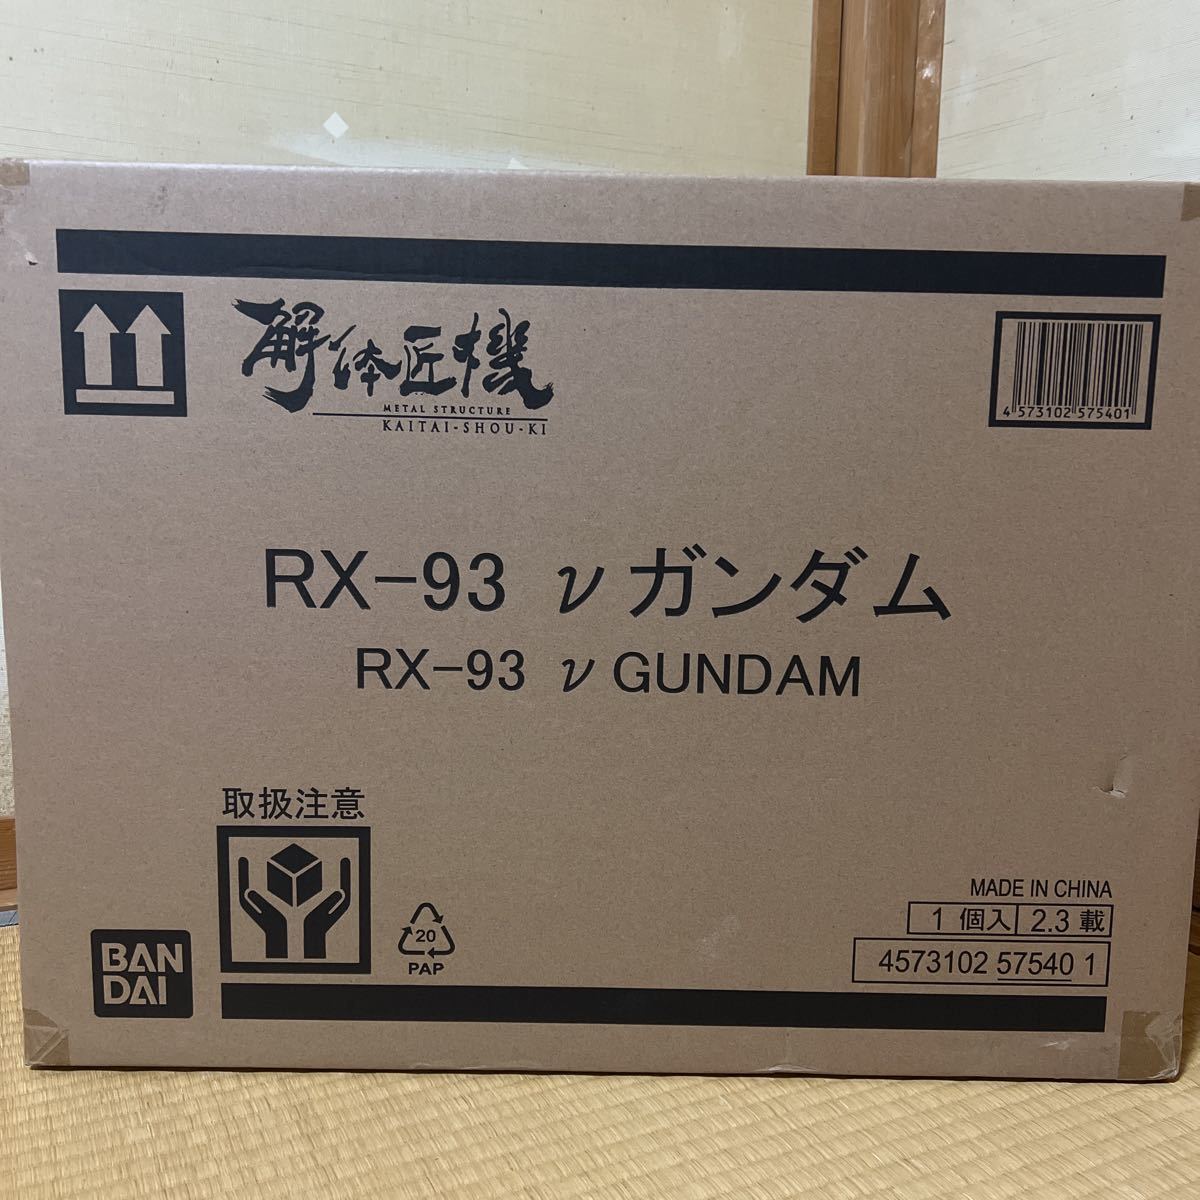  разборка Takumi машина RX-93ν Gundam 